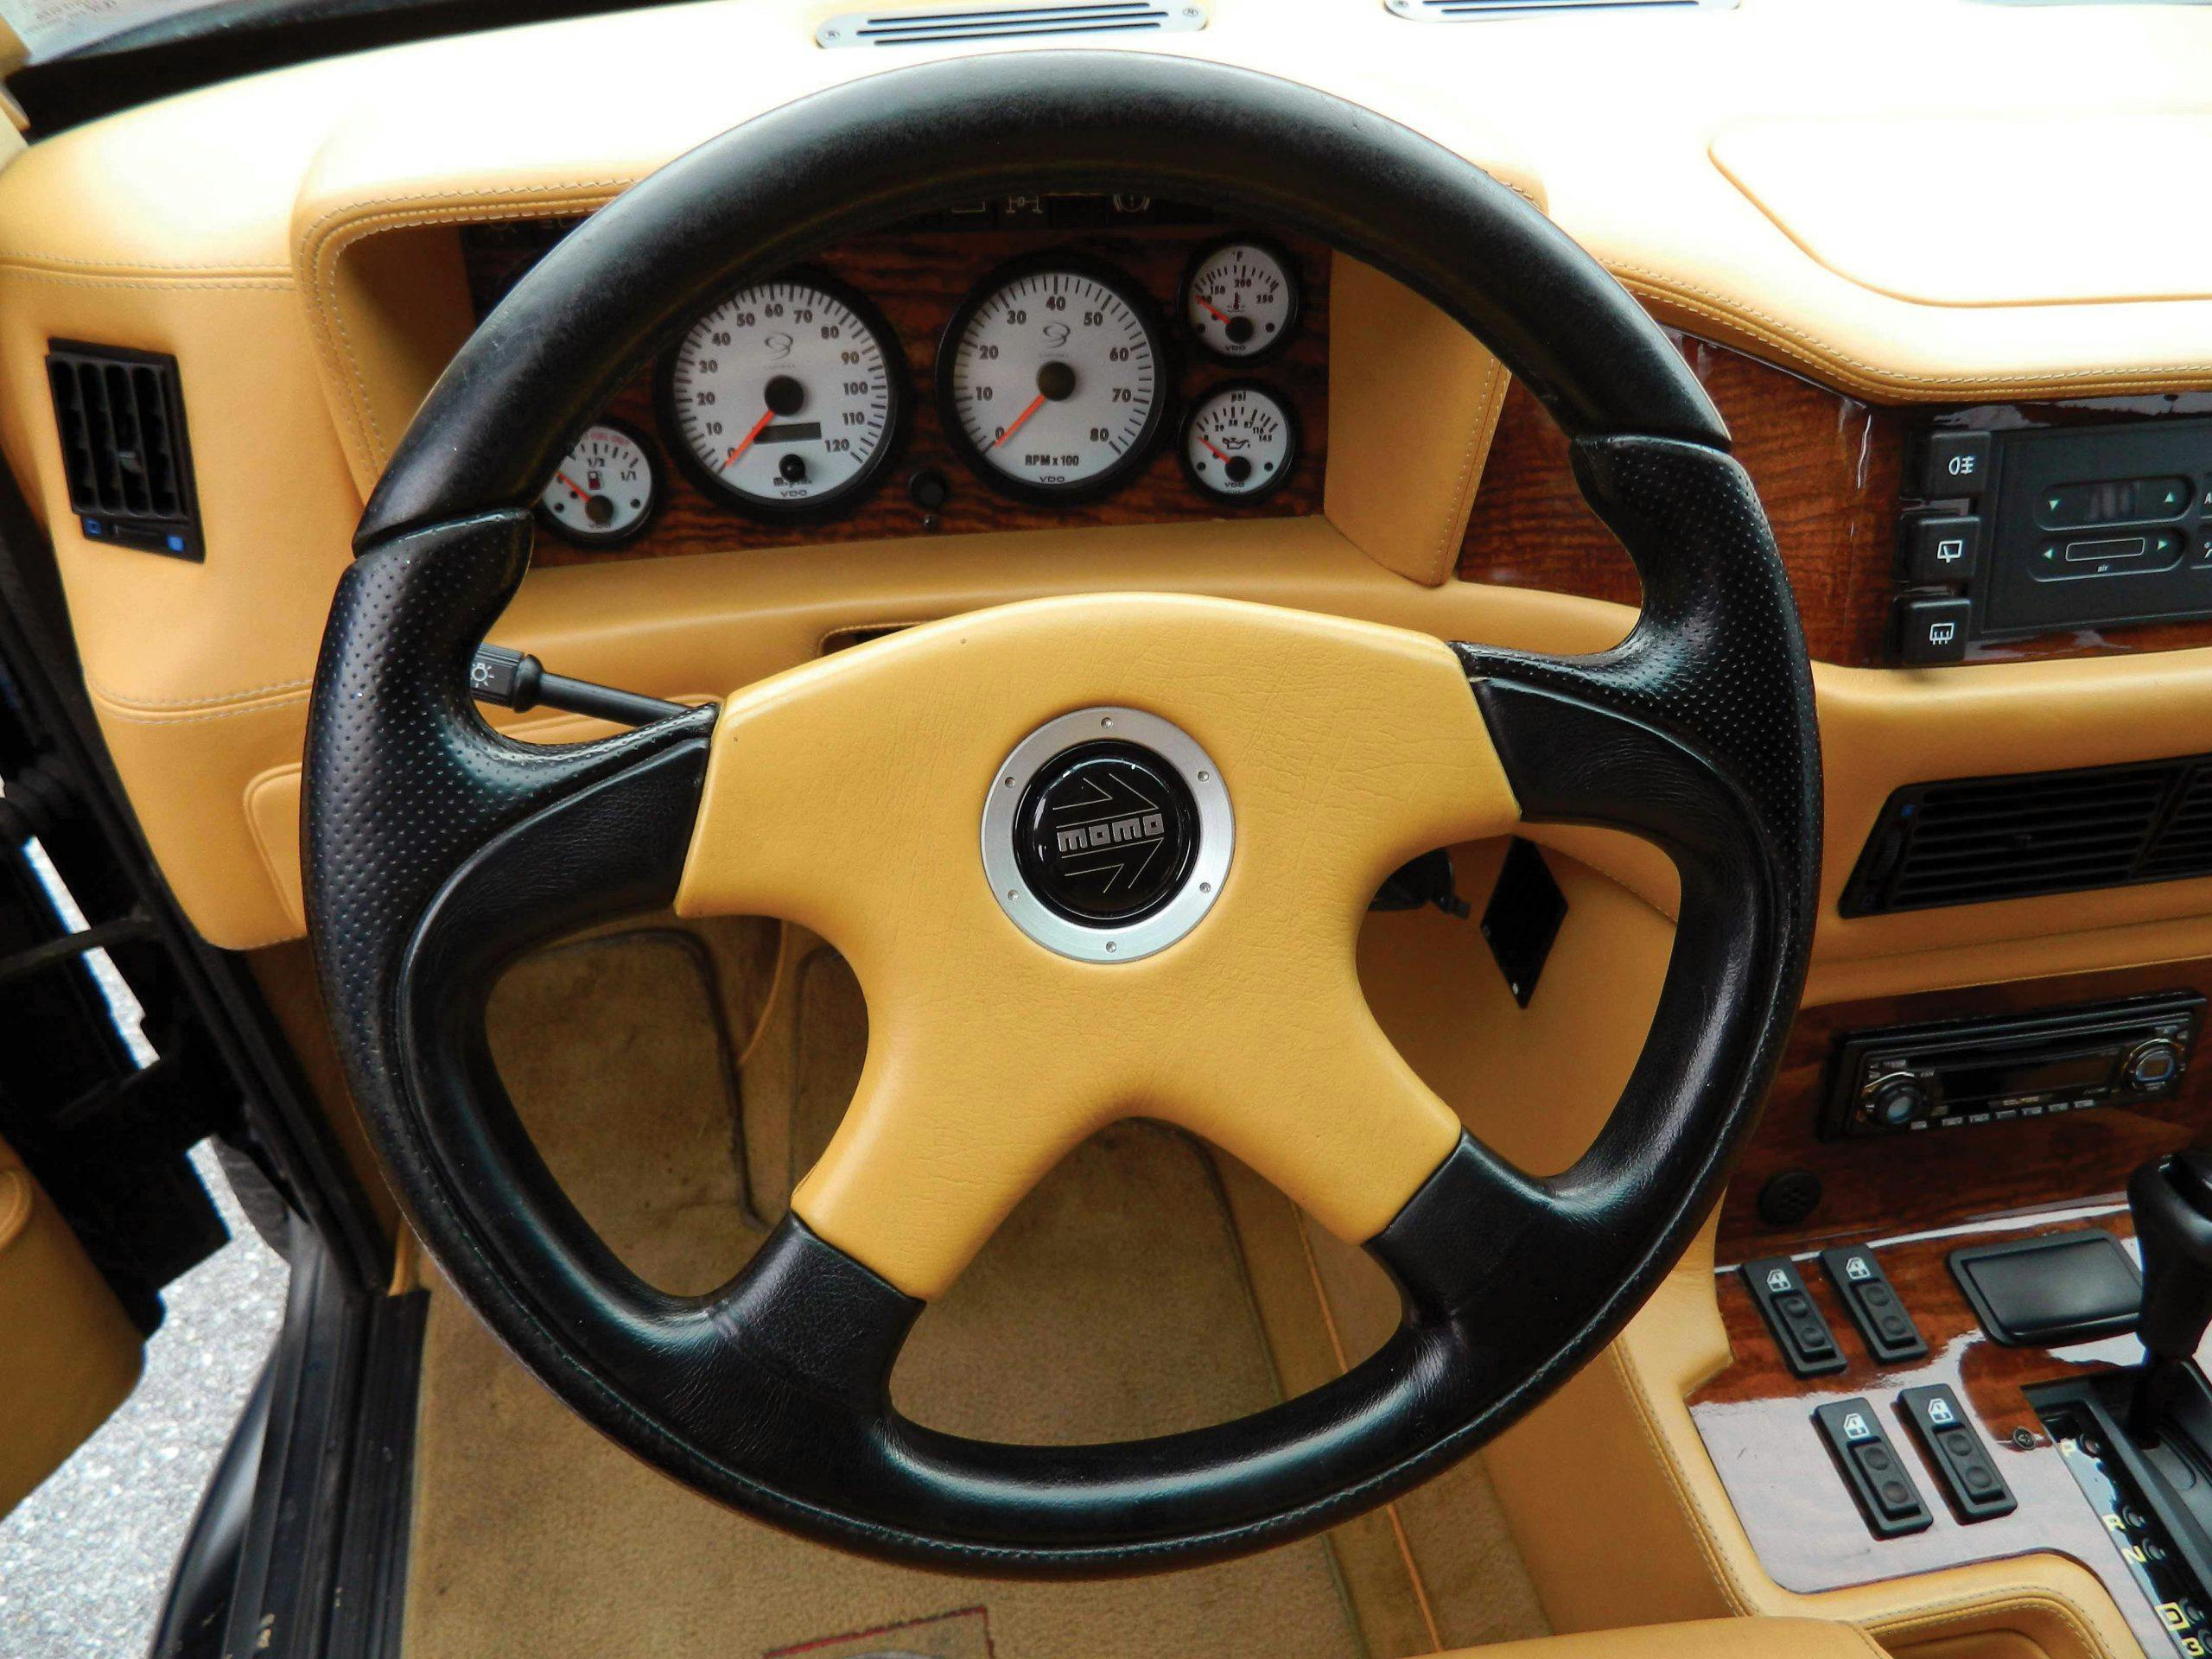 1998 Laforza Magnum interior momo steering wheel